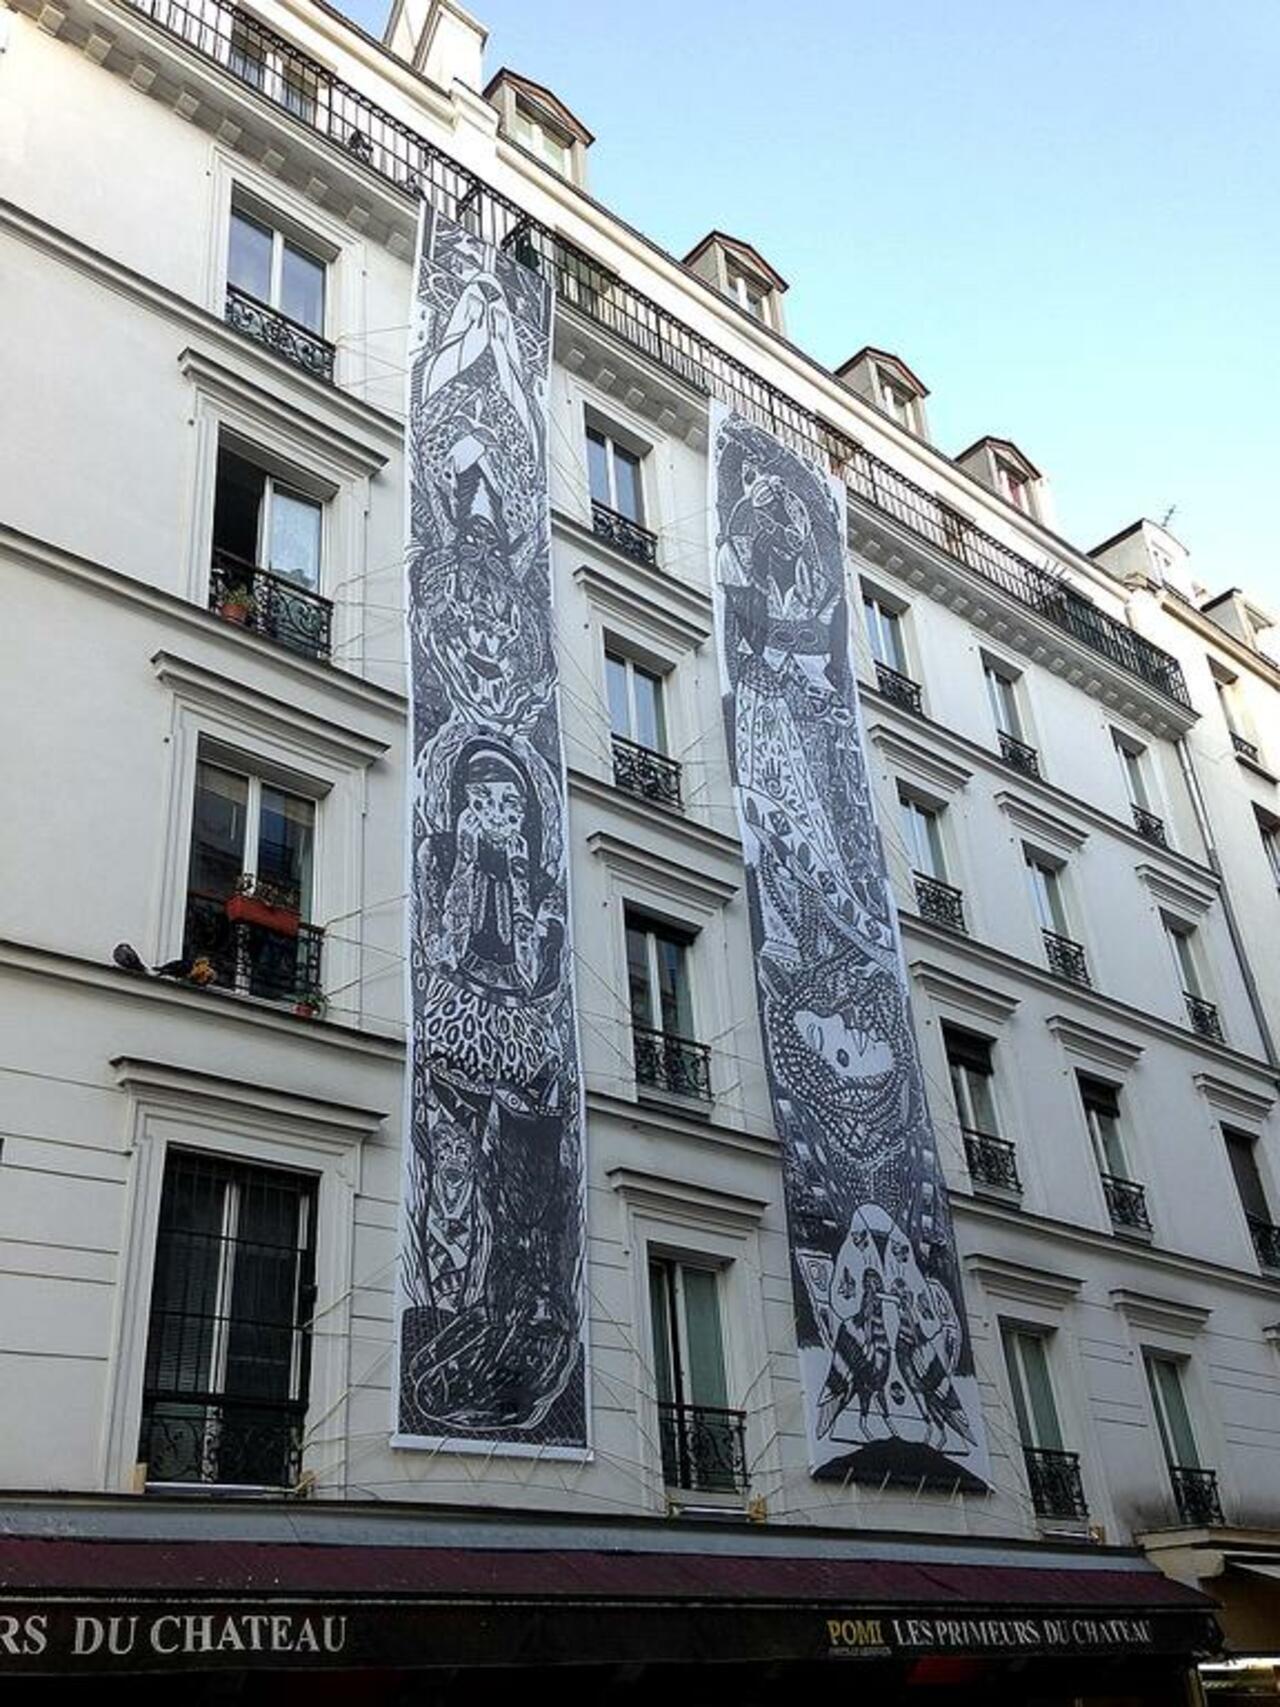 Street Art by Katjastroph in #Paris http://www.urbacolors.com #art #mural #graffiti #streetart http://t.co/djHB18aIGJ